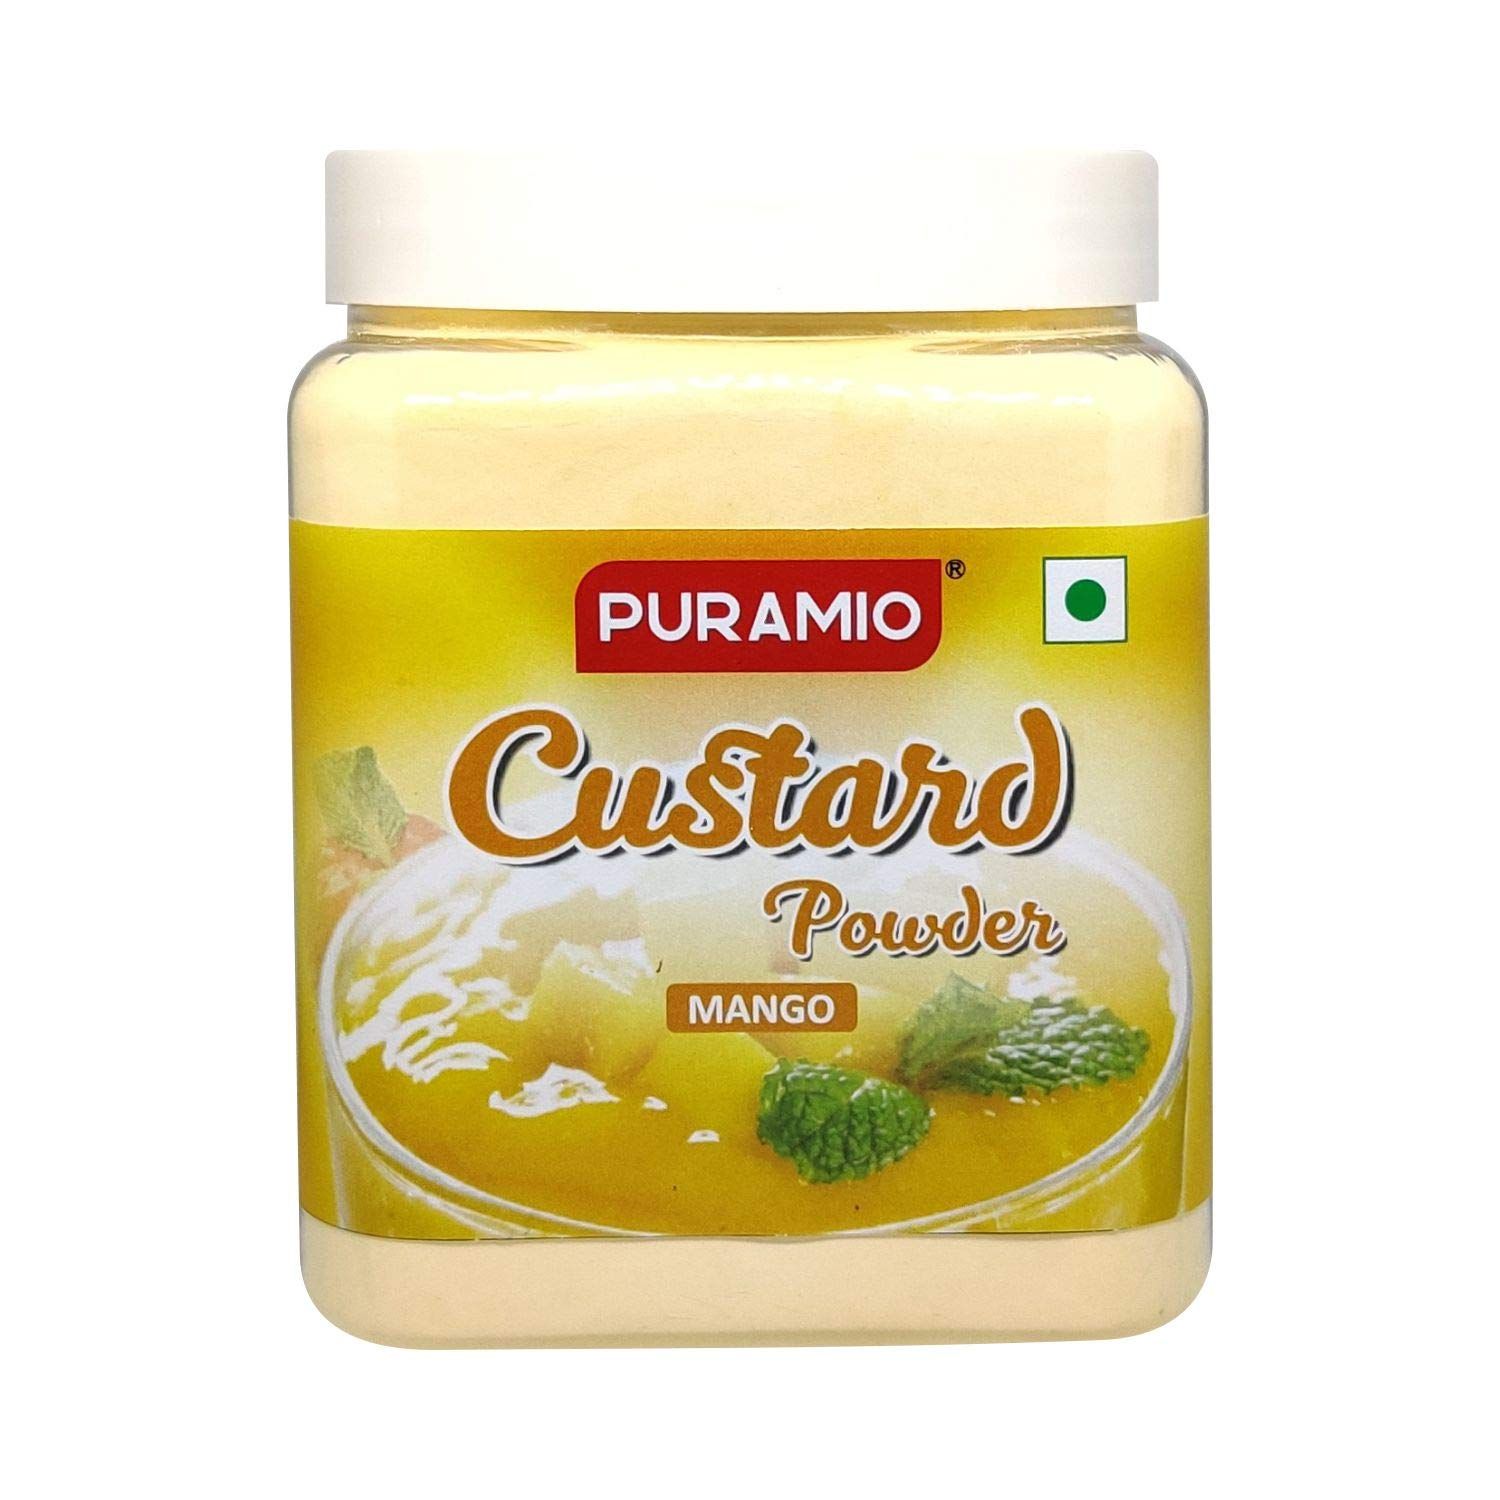 Puramio Custard Powder Mango Image